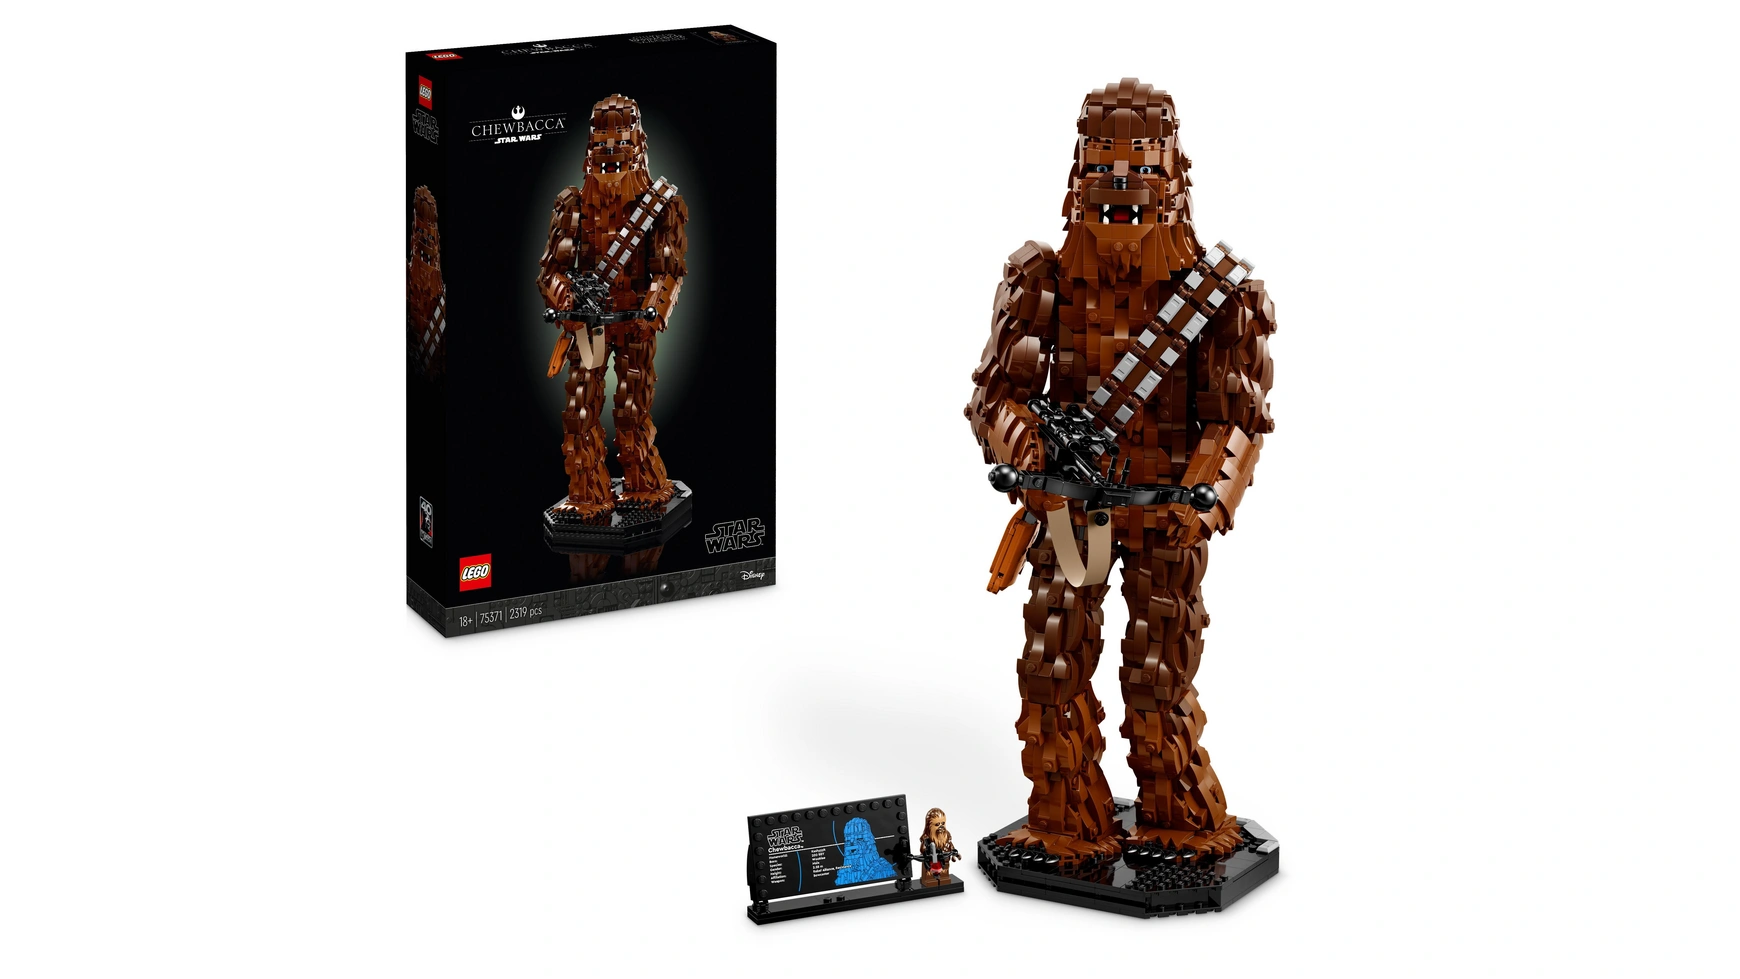 цена Lego Star Wars Фигурка Чубакки, модель здания вуки для взрослых